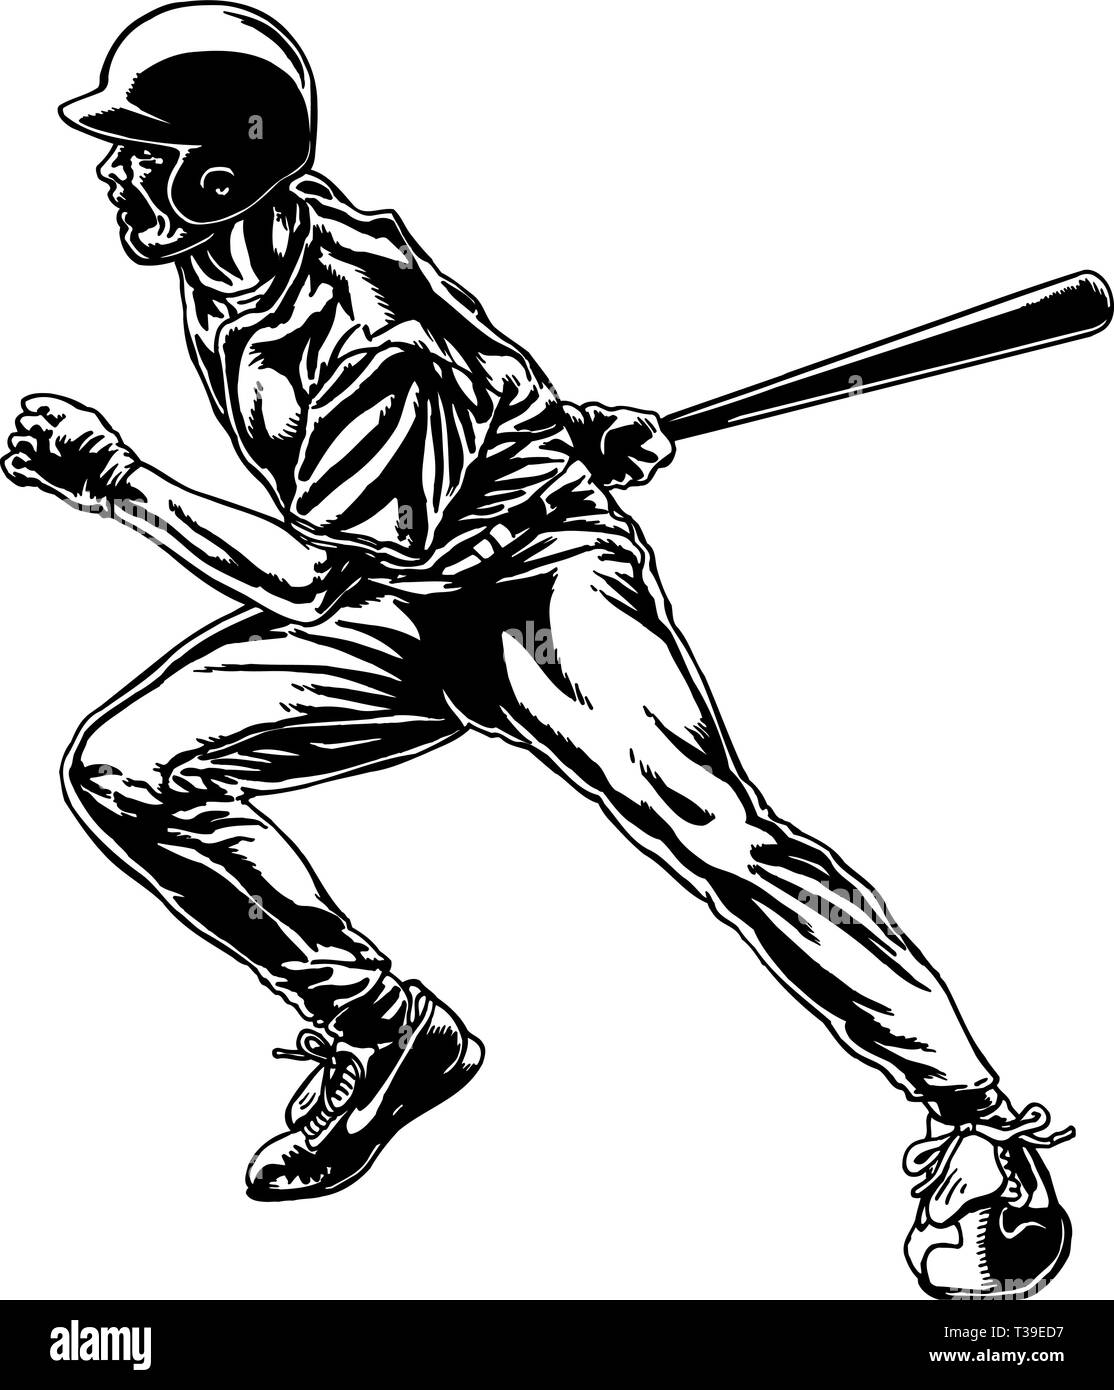 Baseball Batter Vector Illustration Stock Vector